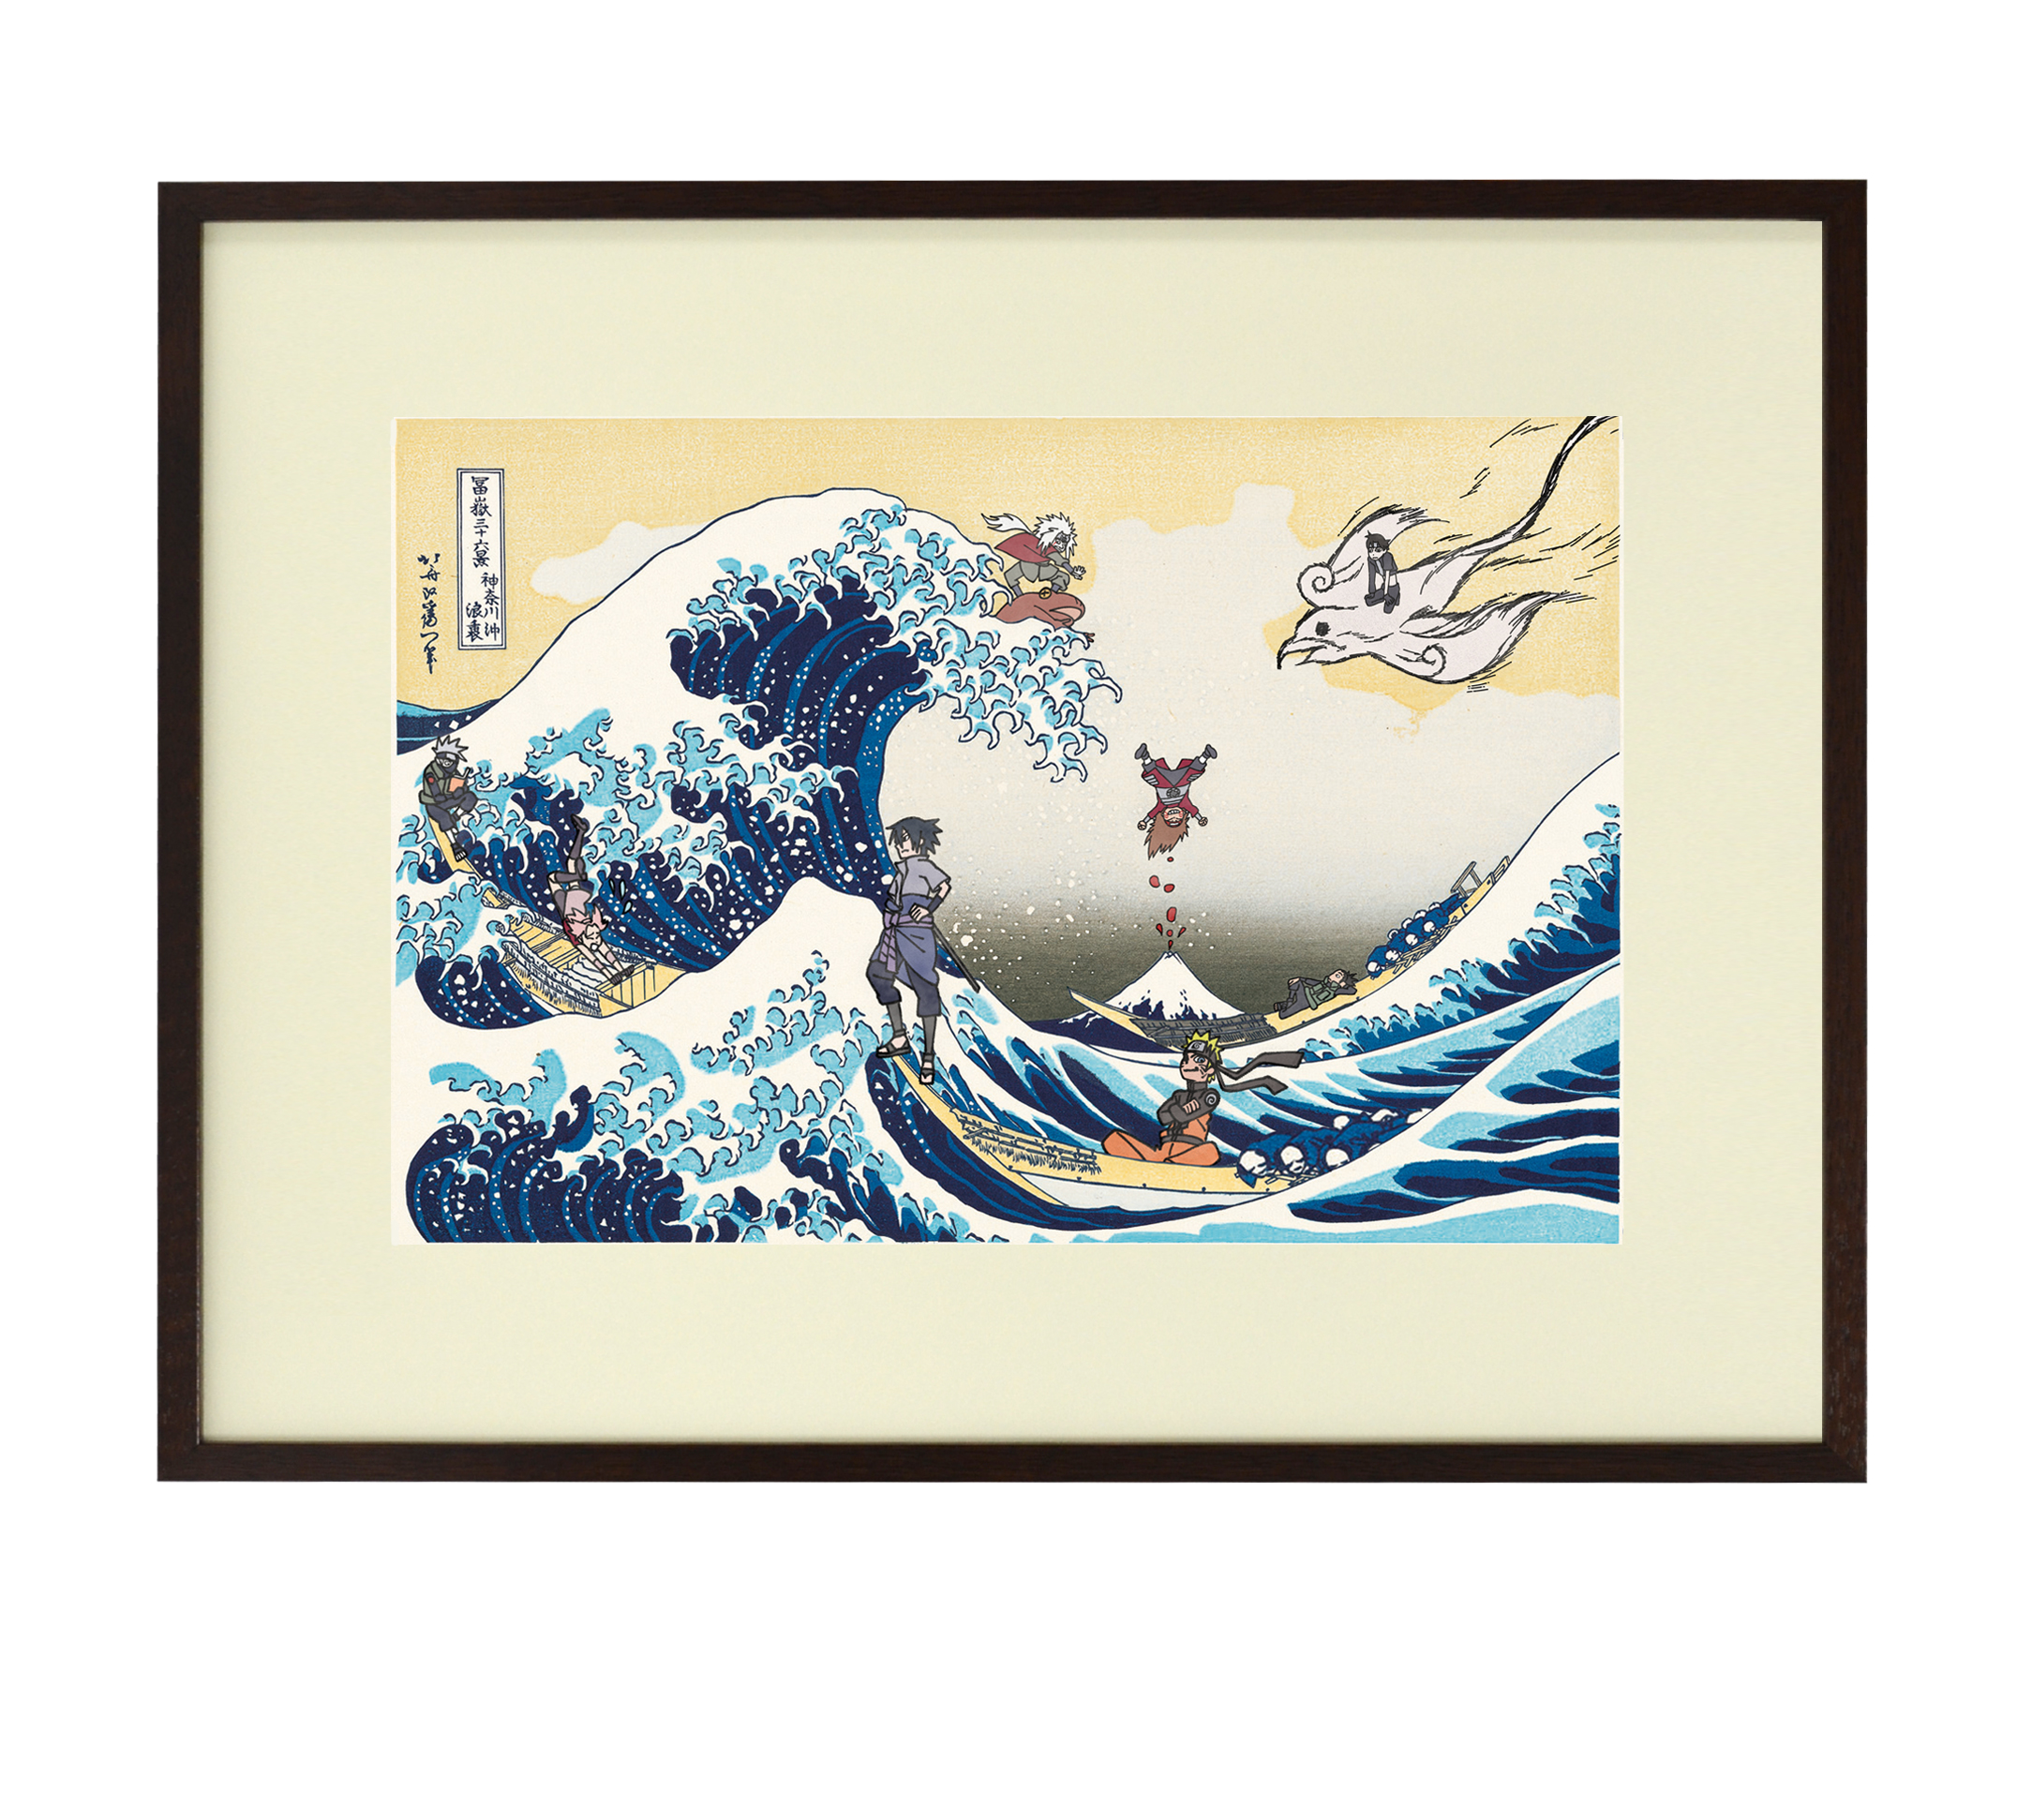 「NARUTO-ナルト-」 浮世絵コラボレーション木版画